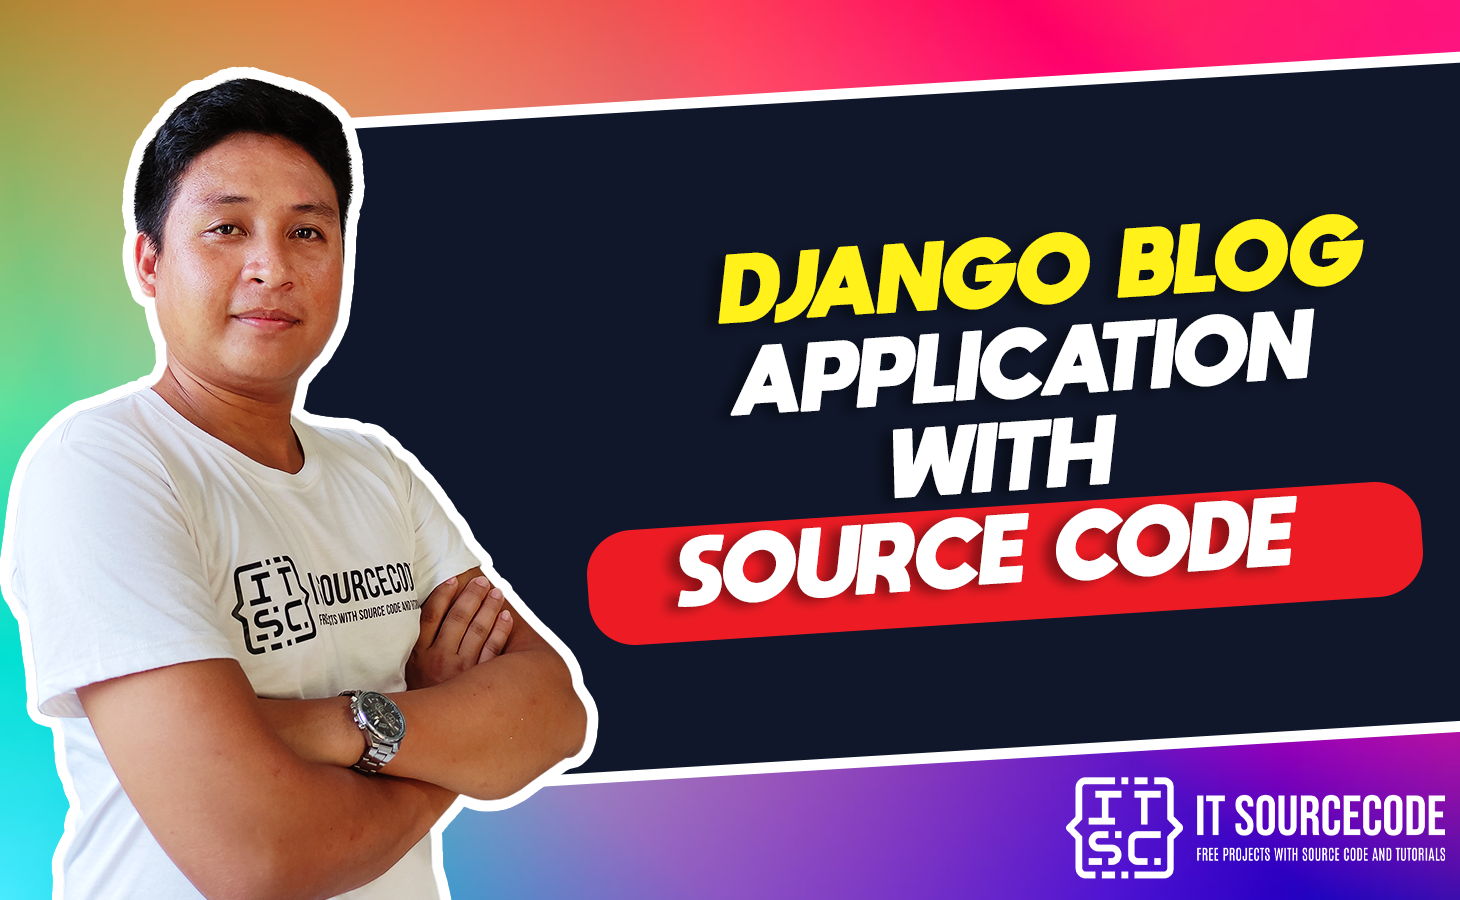 Django Blog Application with Source Code